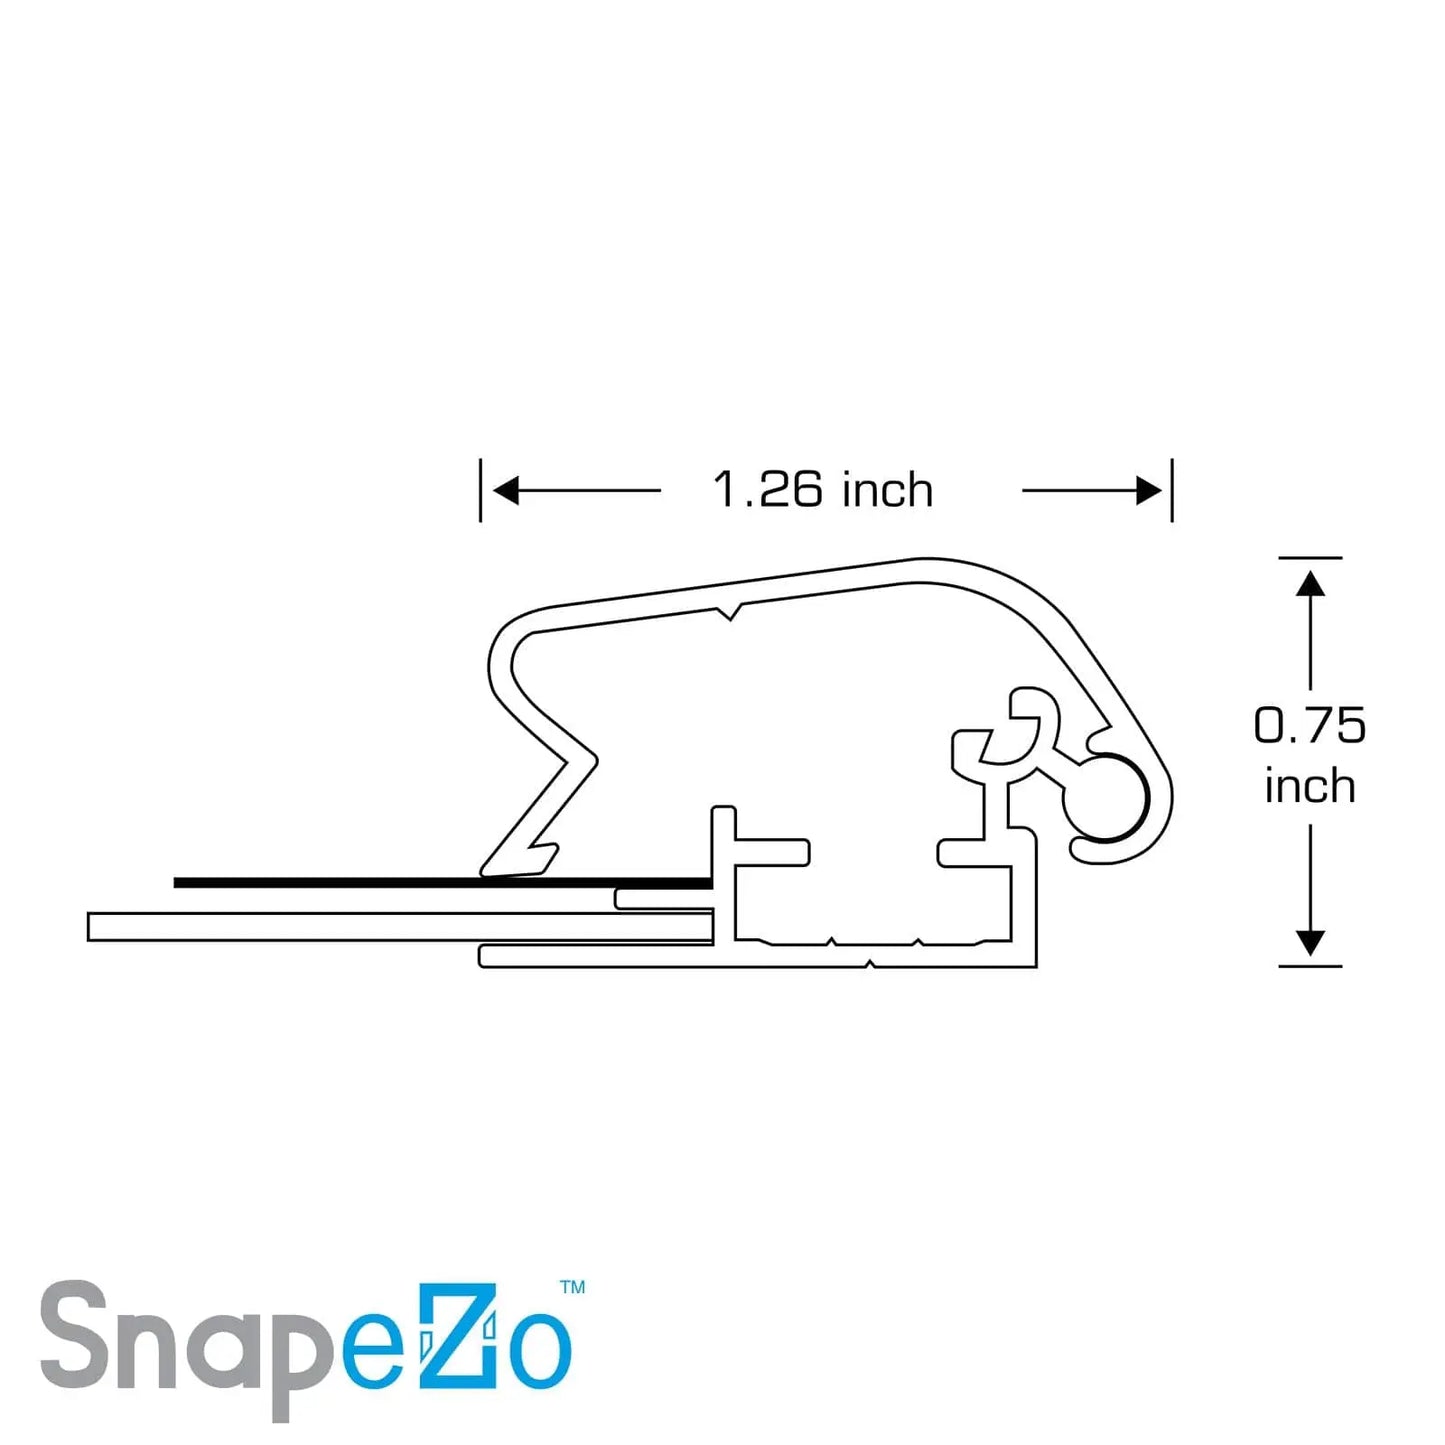 8.5x11 Dark Wood SnapeZo® Snap Frame - 1.25" Profile - Snap Frames Direct